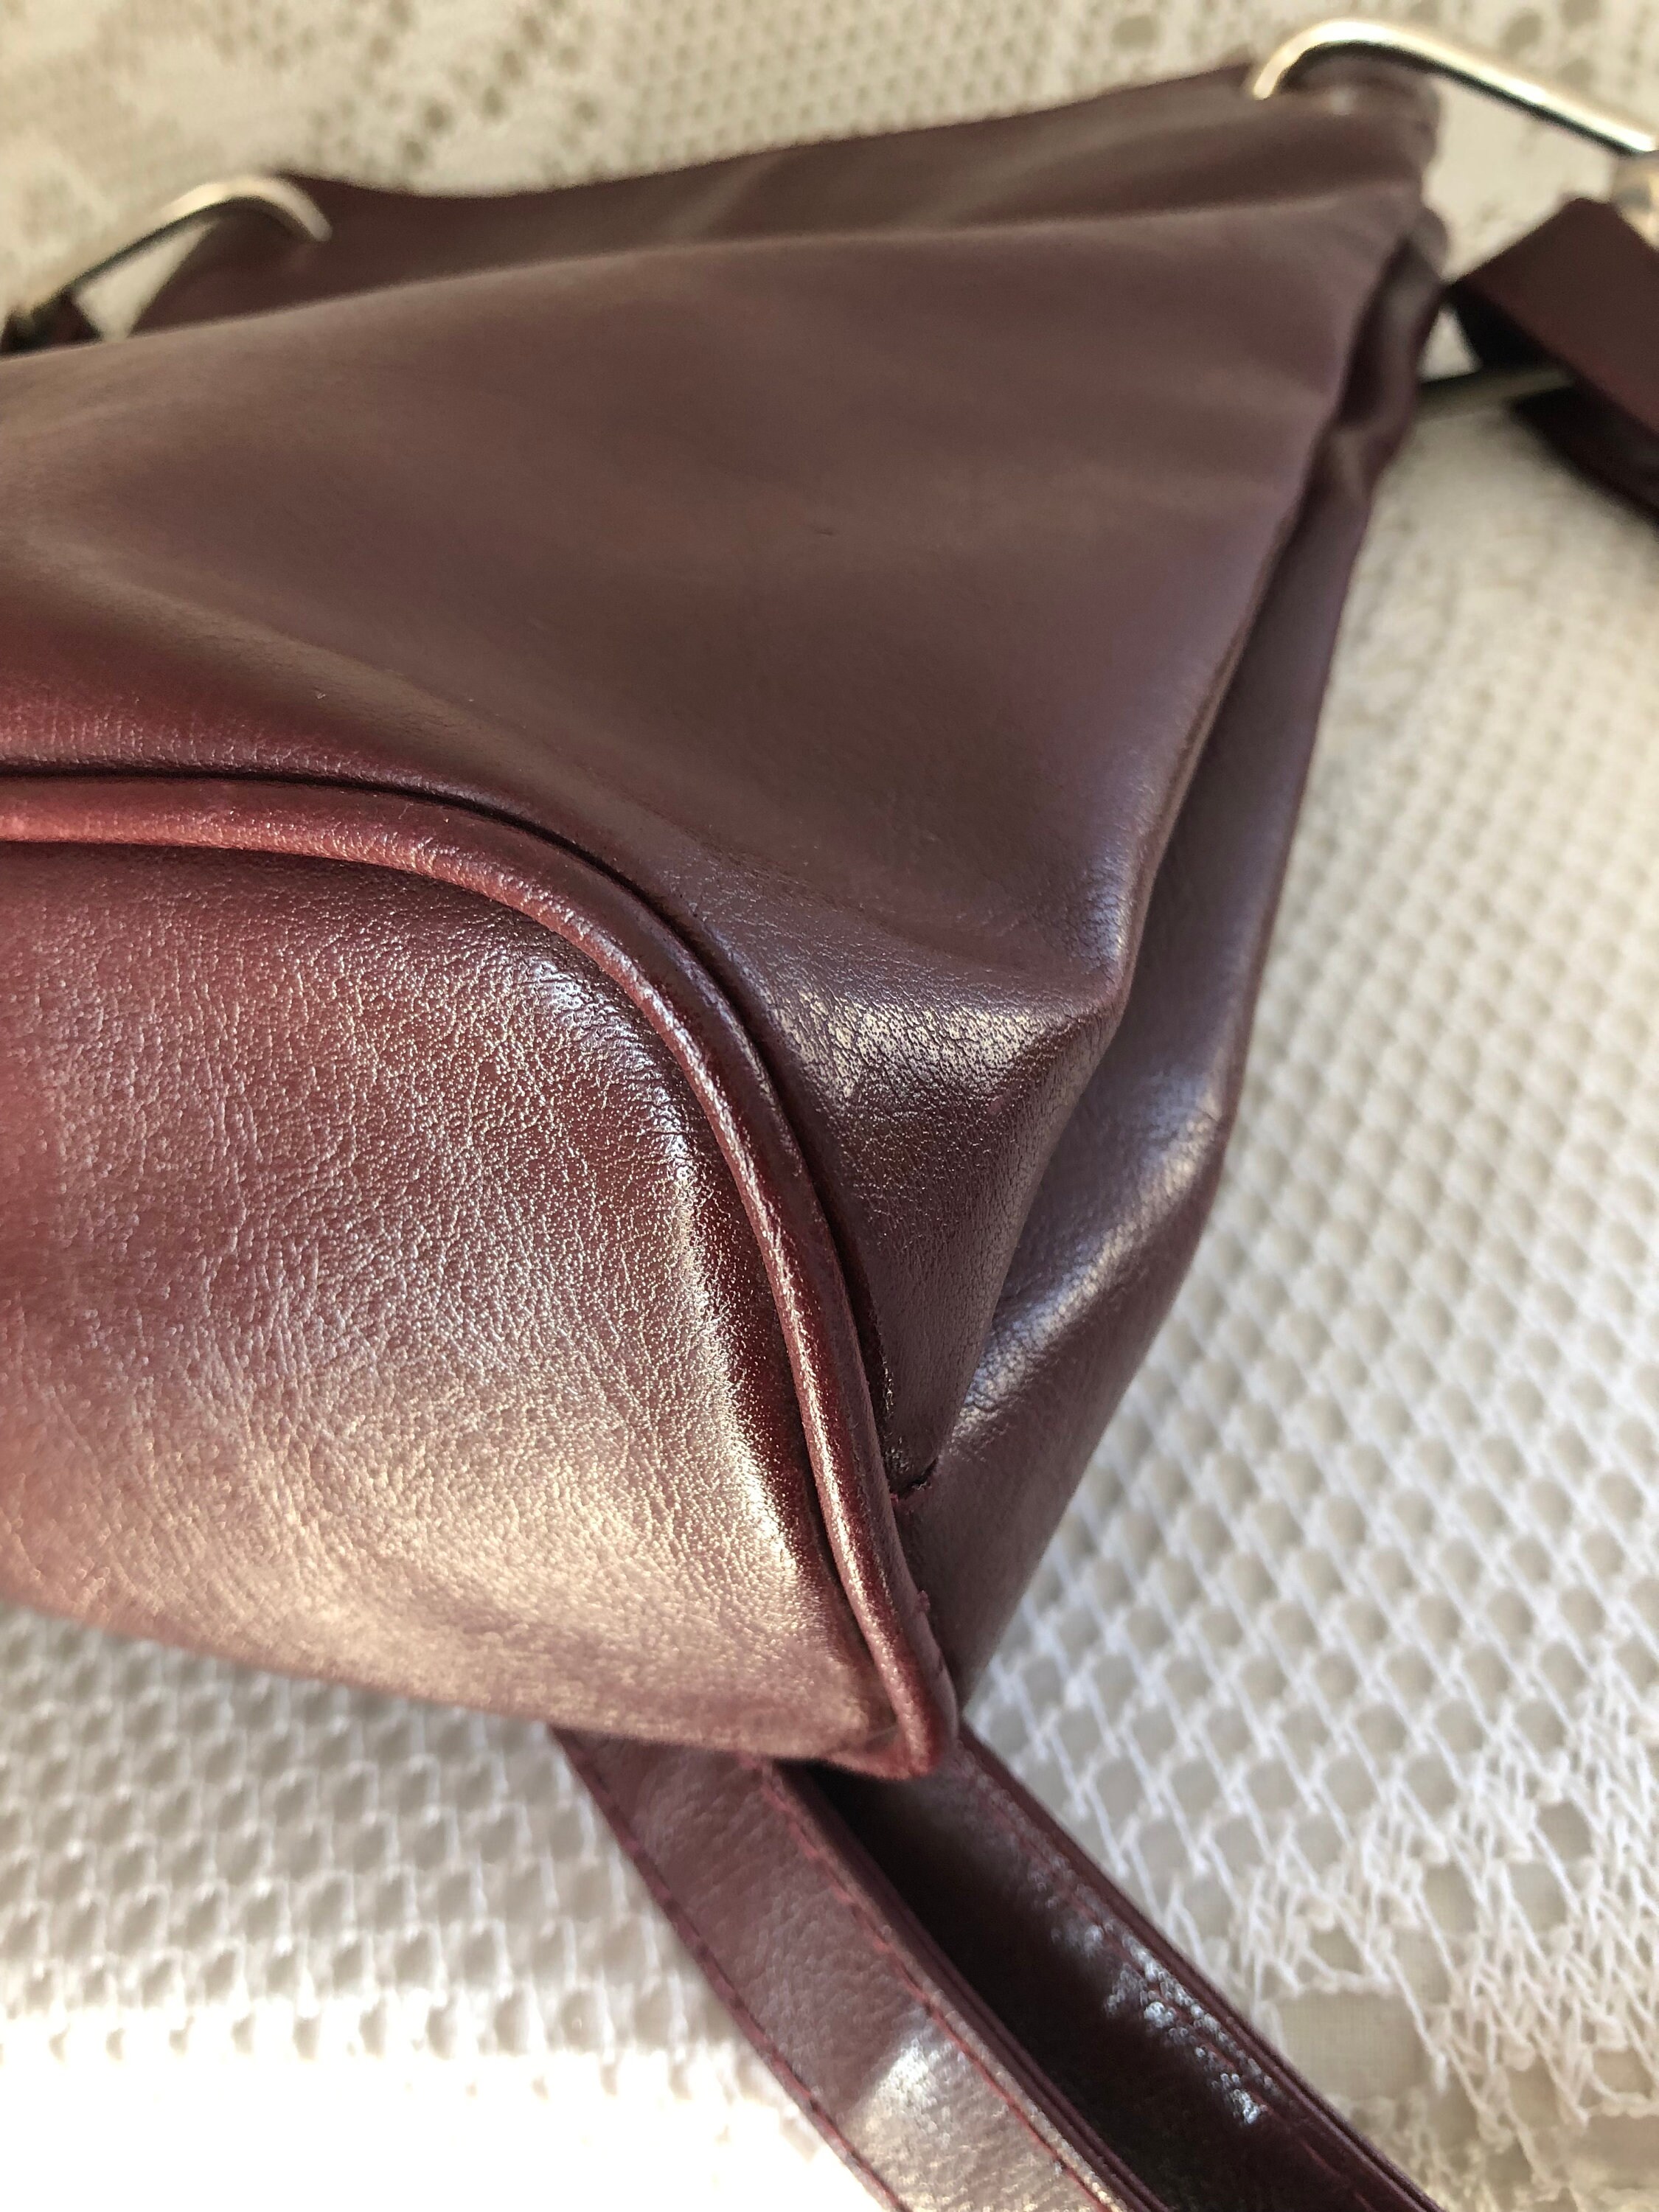 Lady Milan croc embossed bordeaux leather handbag